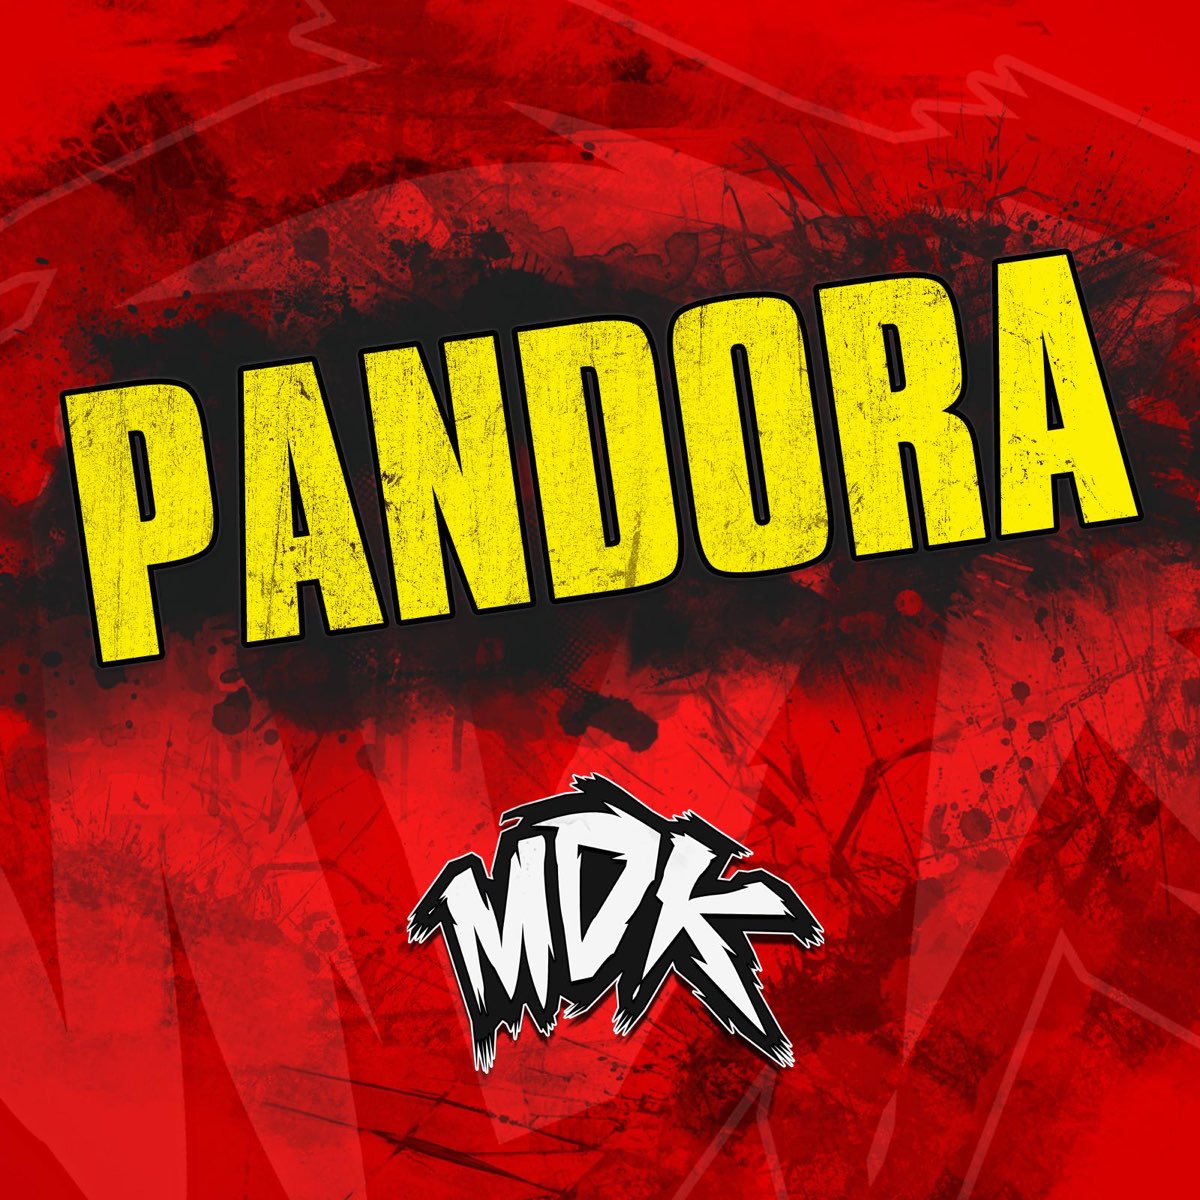 Pandora - Single by MDK on Apple Music